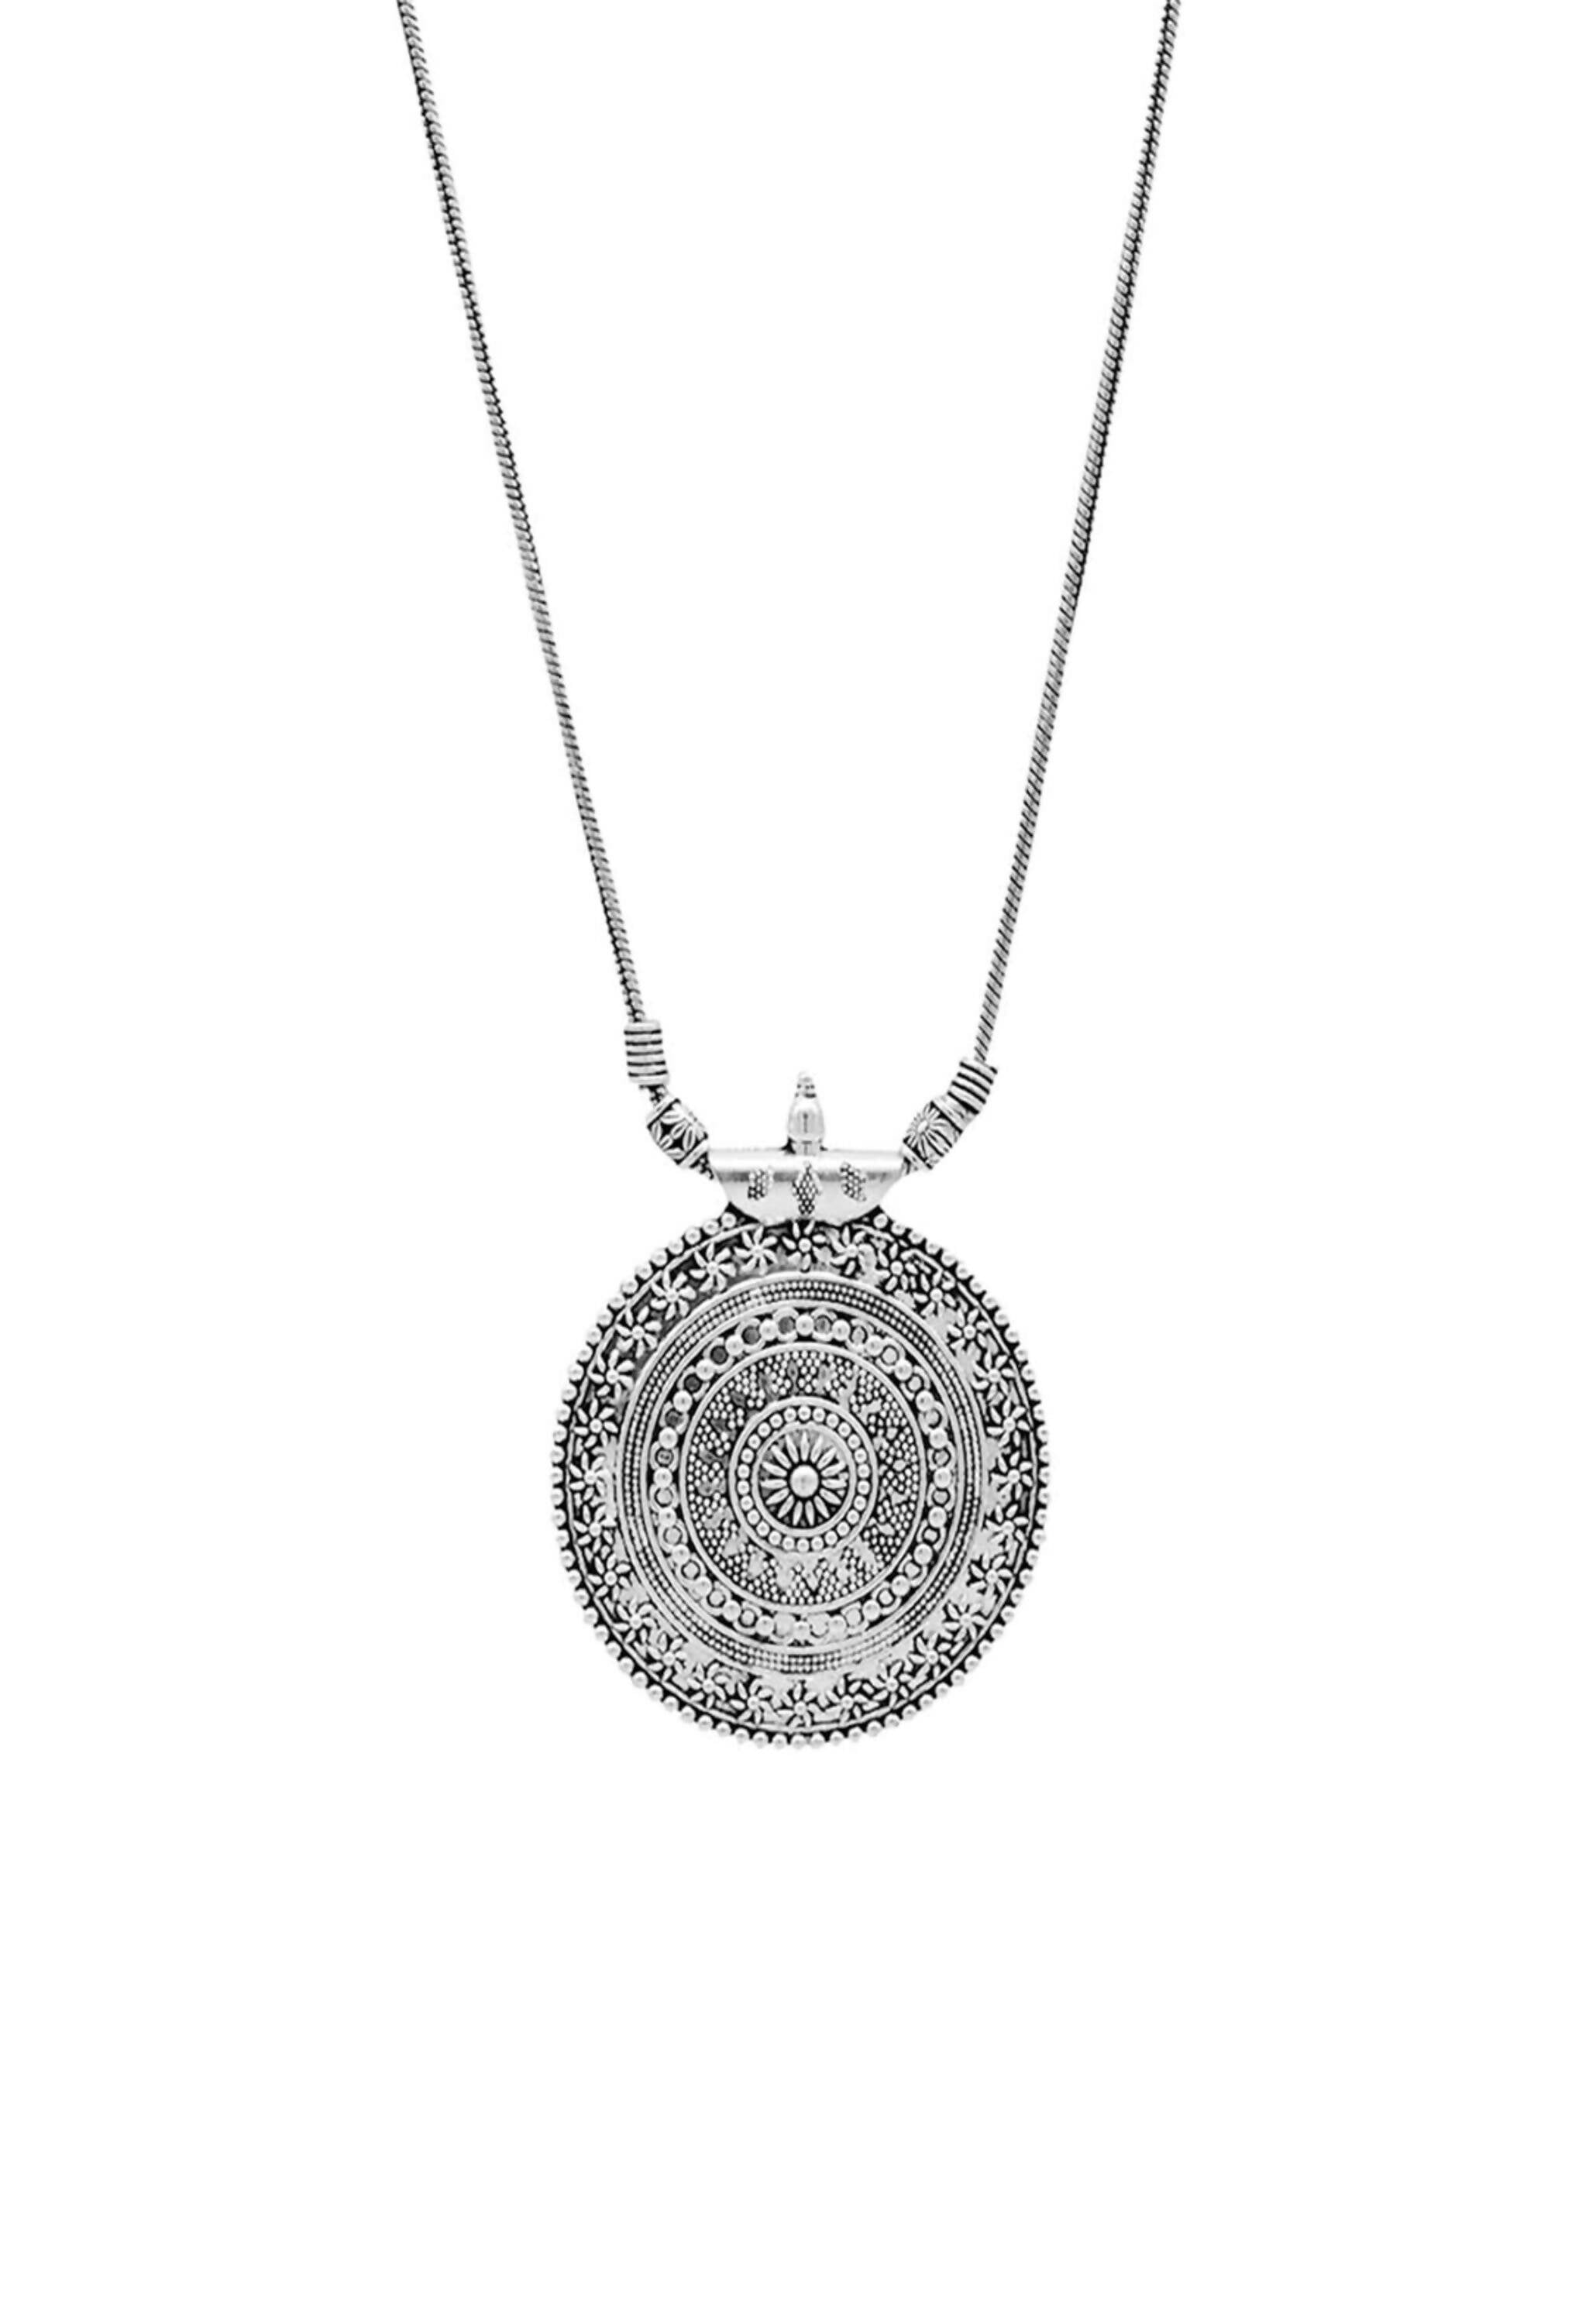 Shreveport Louisiana Silver Plated Necklace